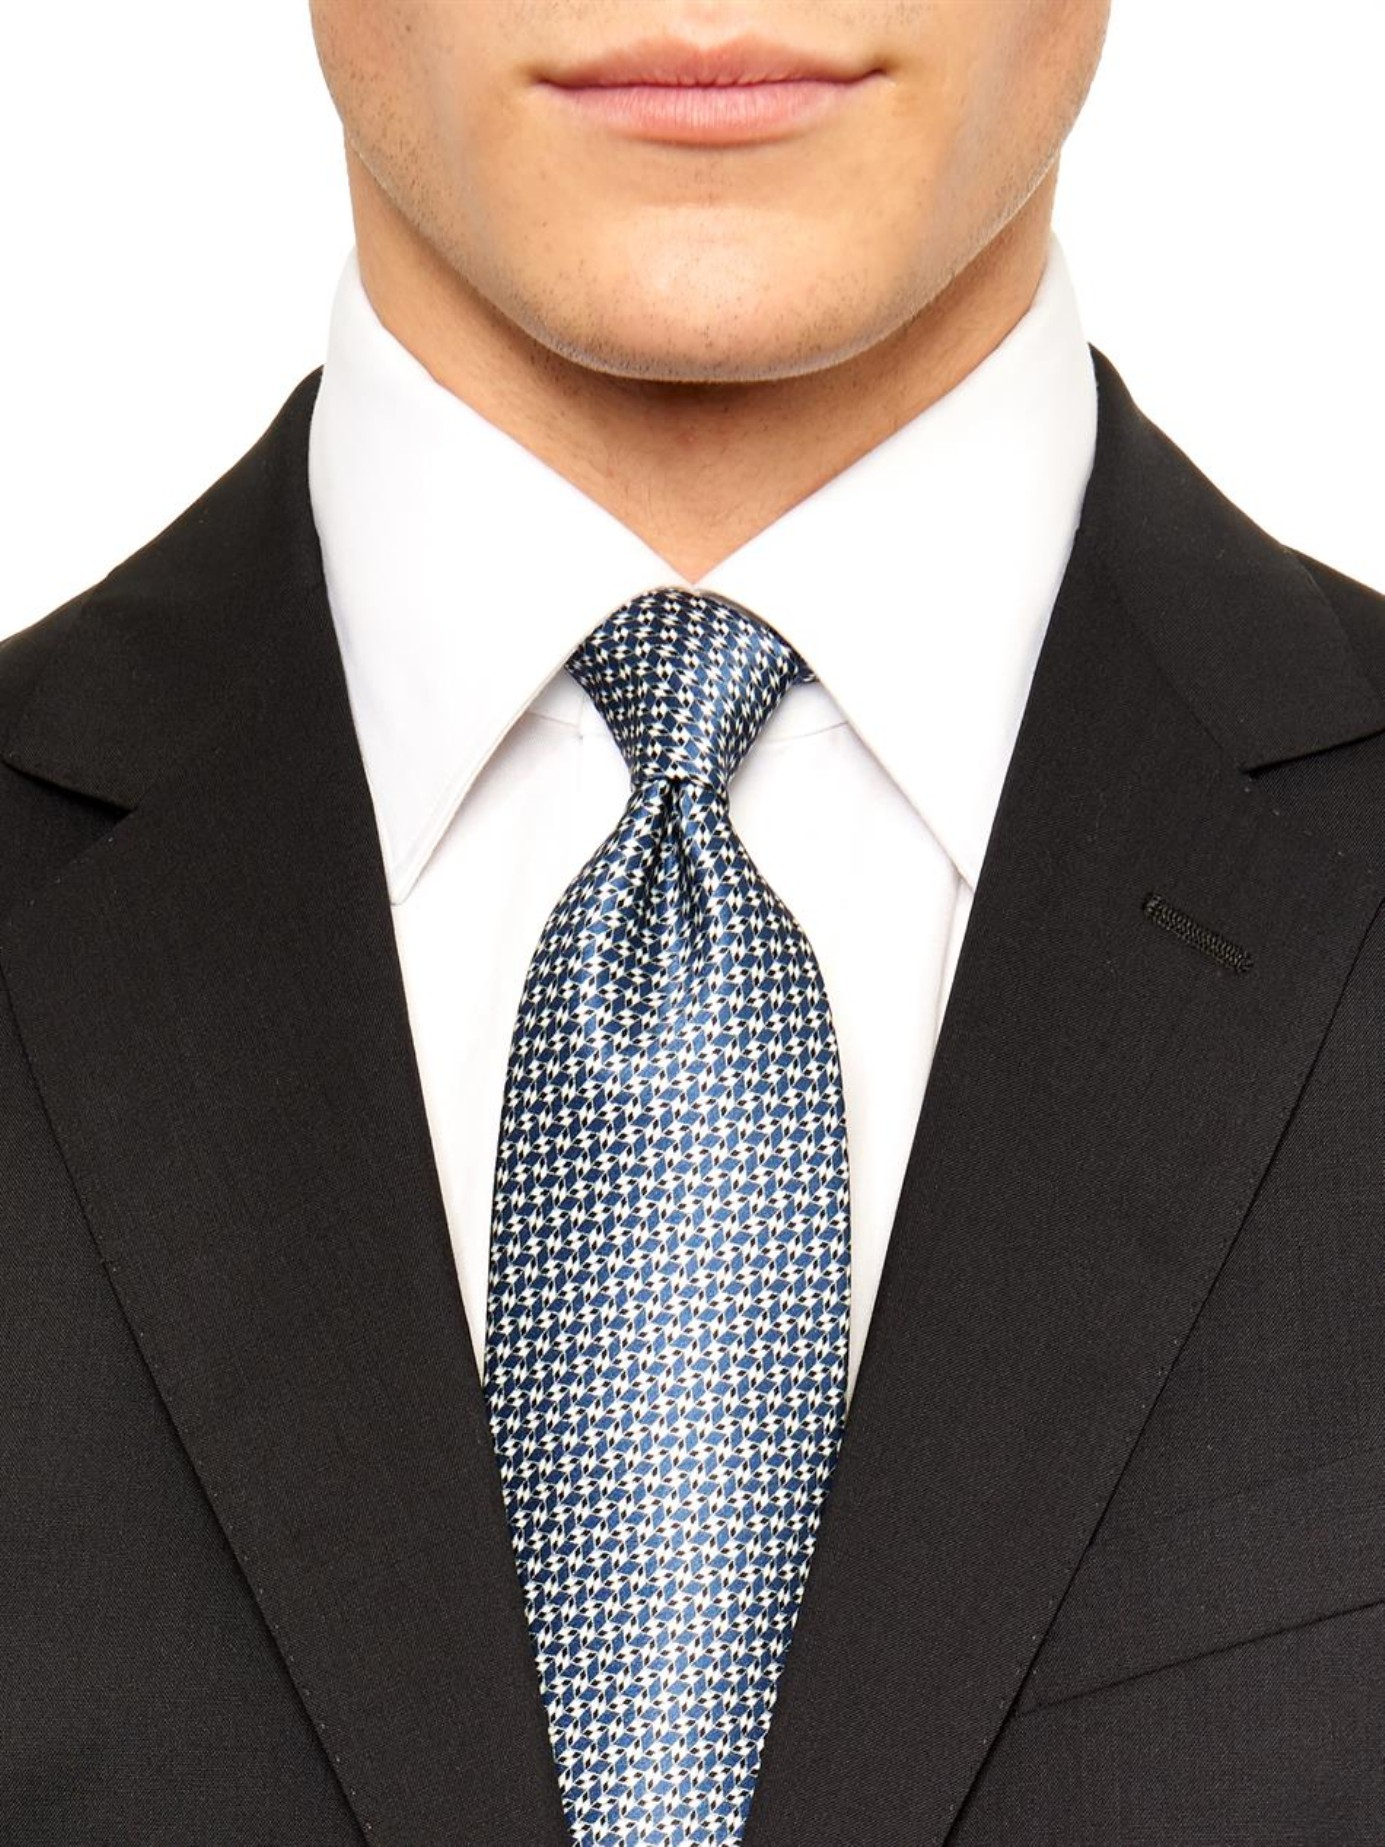 Lyst - Brioni Micro-Geometric Print Silk Tie in Blue for Men